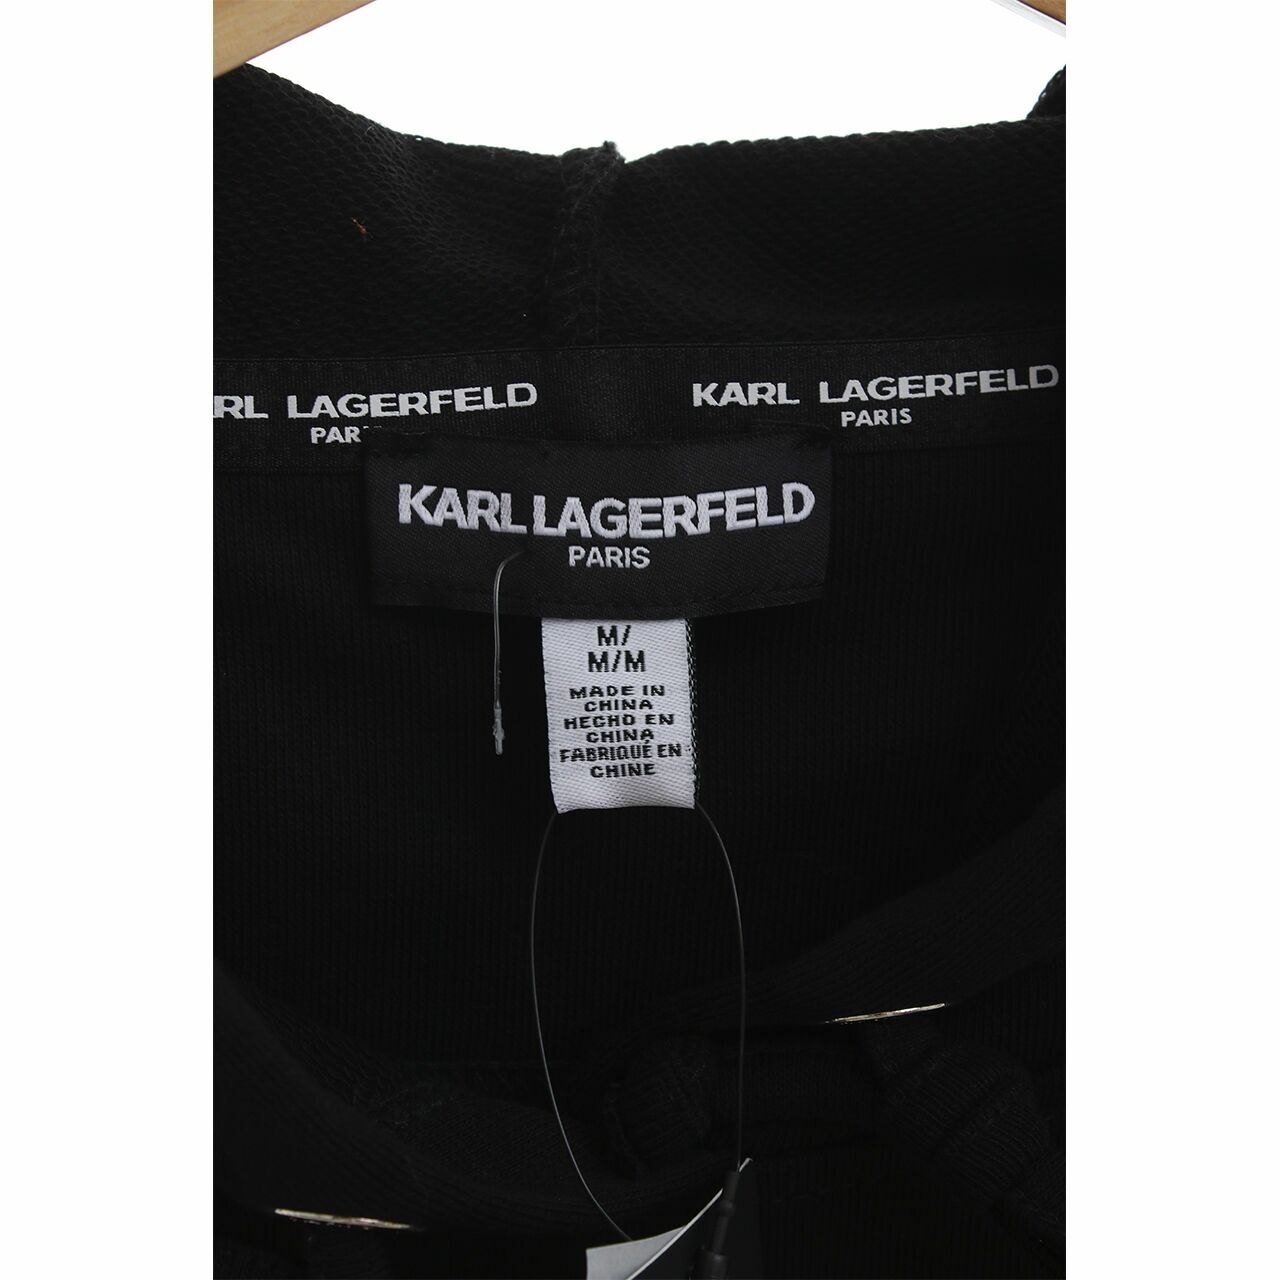 Karl Lagerfeld Black Gold  Long Sleeve Sweatshirt Dress